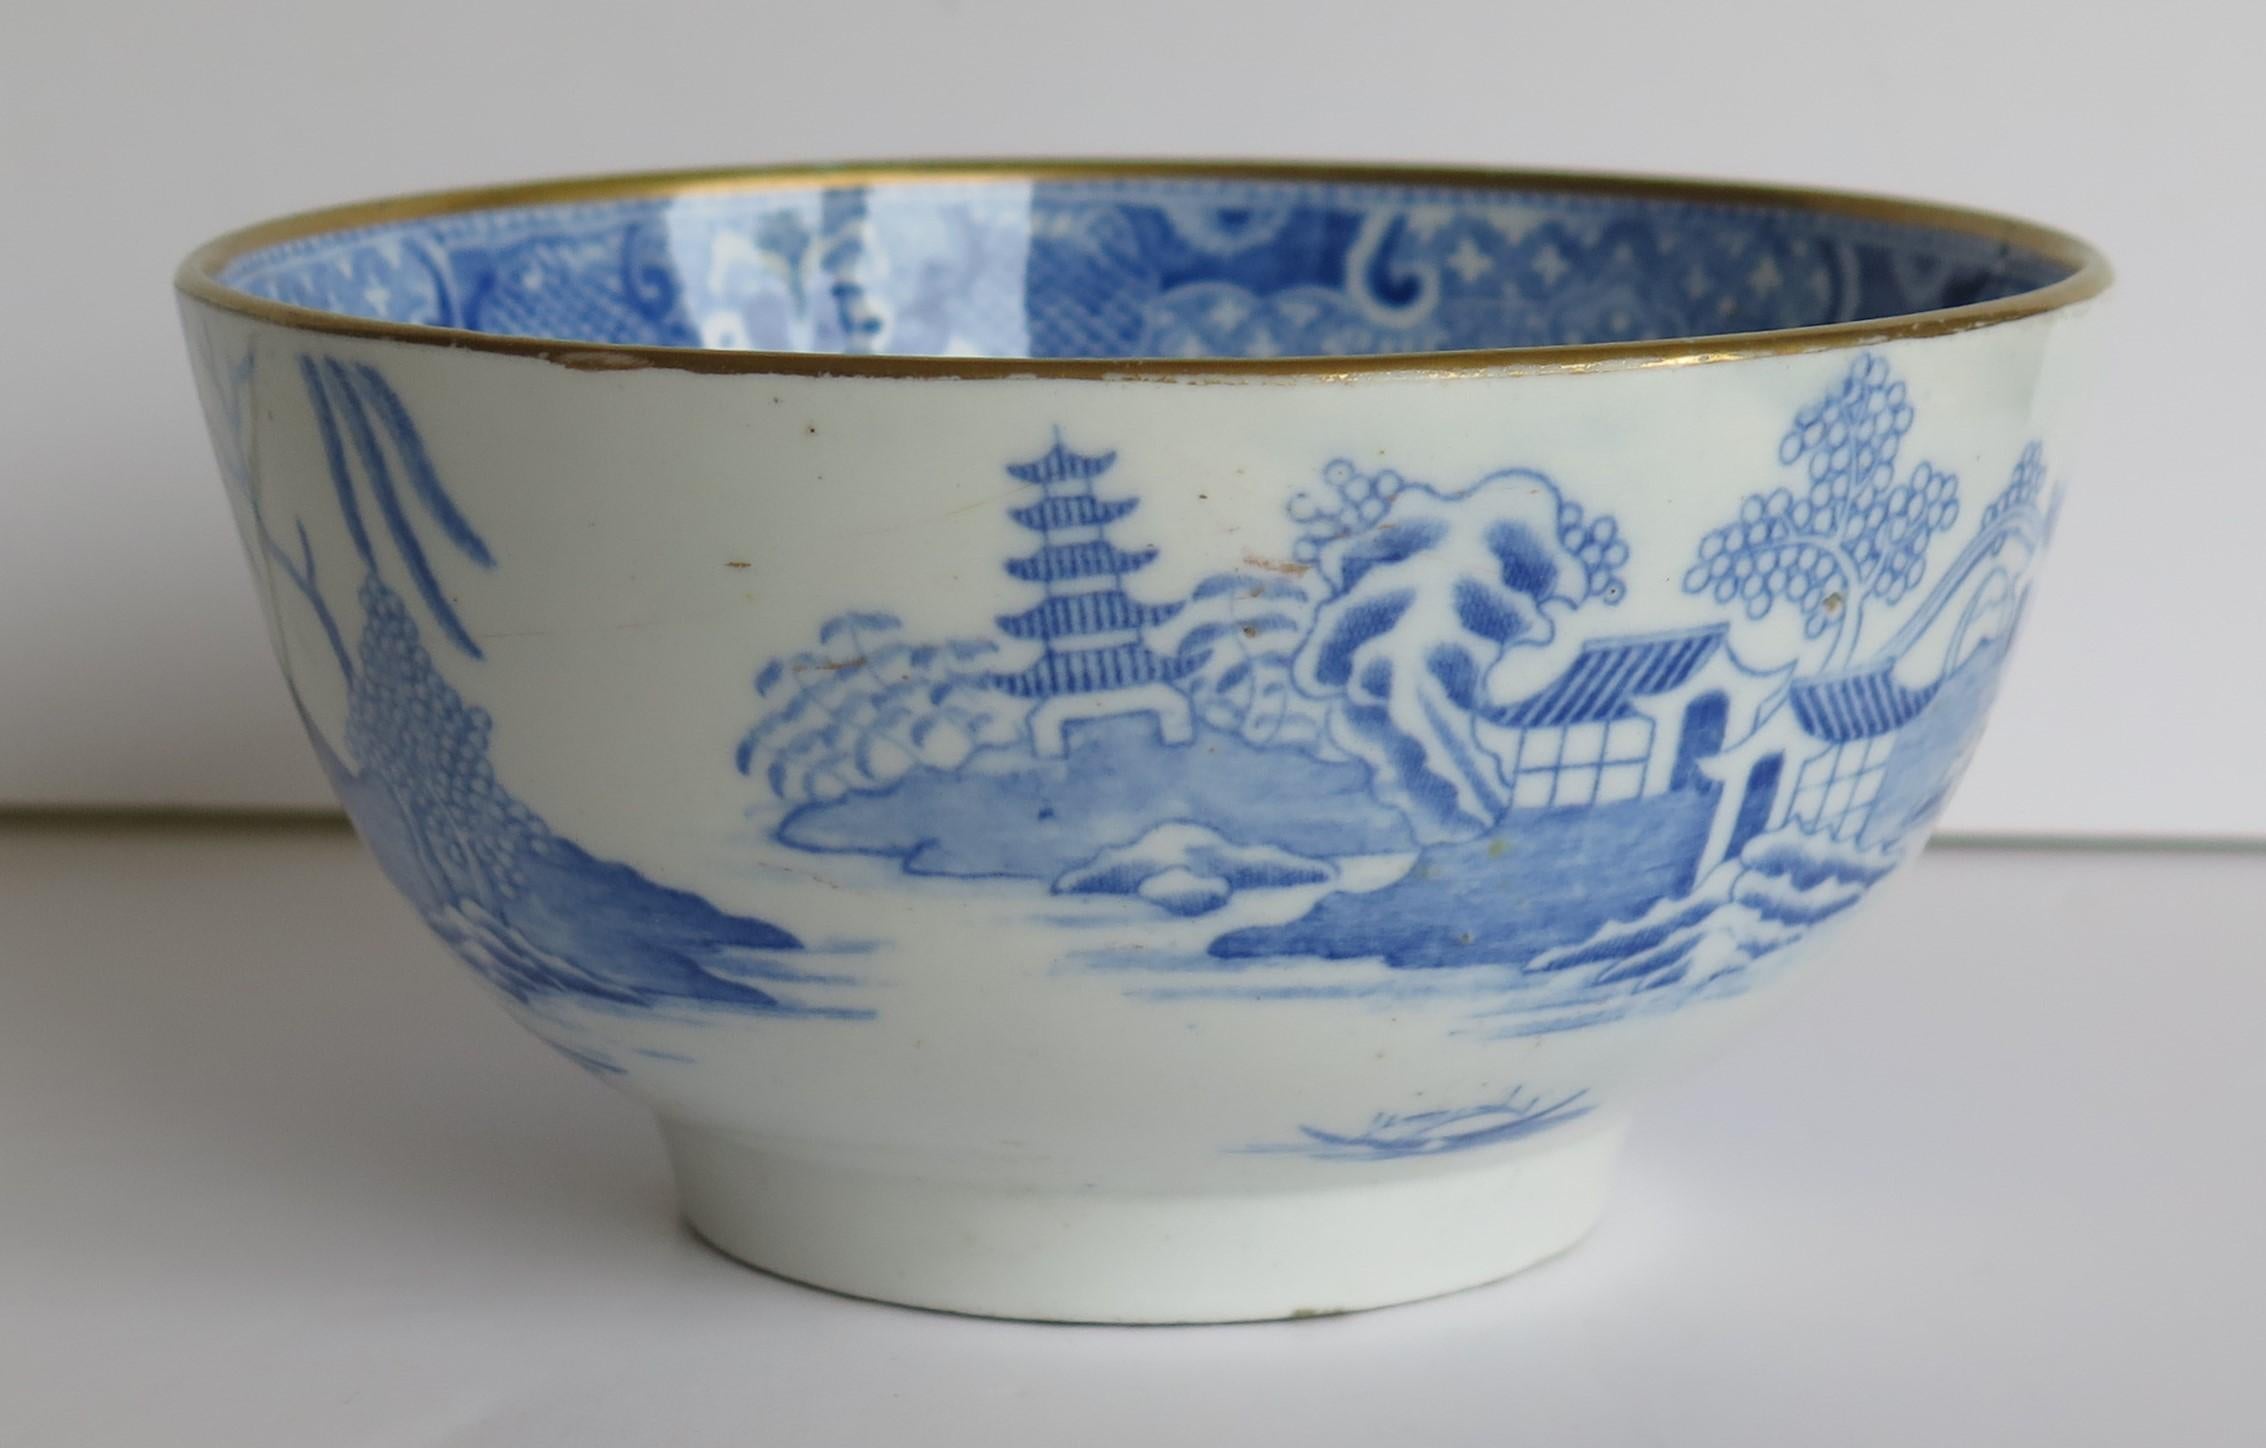 Glazed Miles Mason Porcelain Bowl Blue and White Broseley Pattern, English, circa 1805